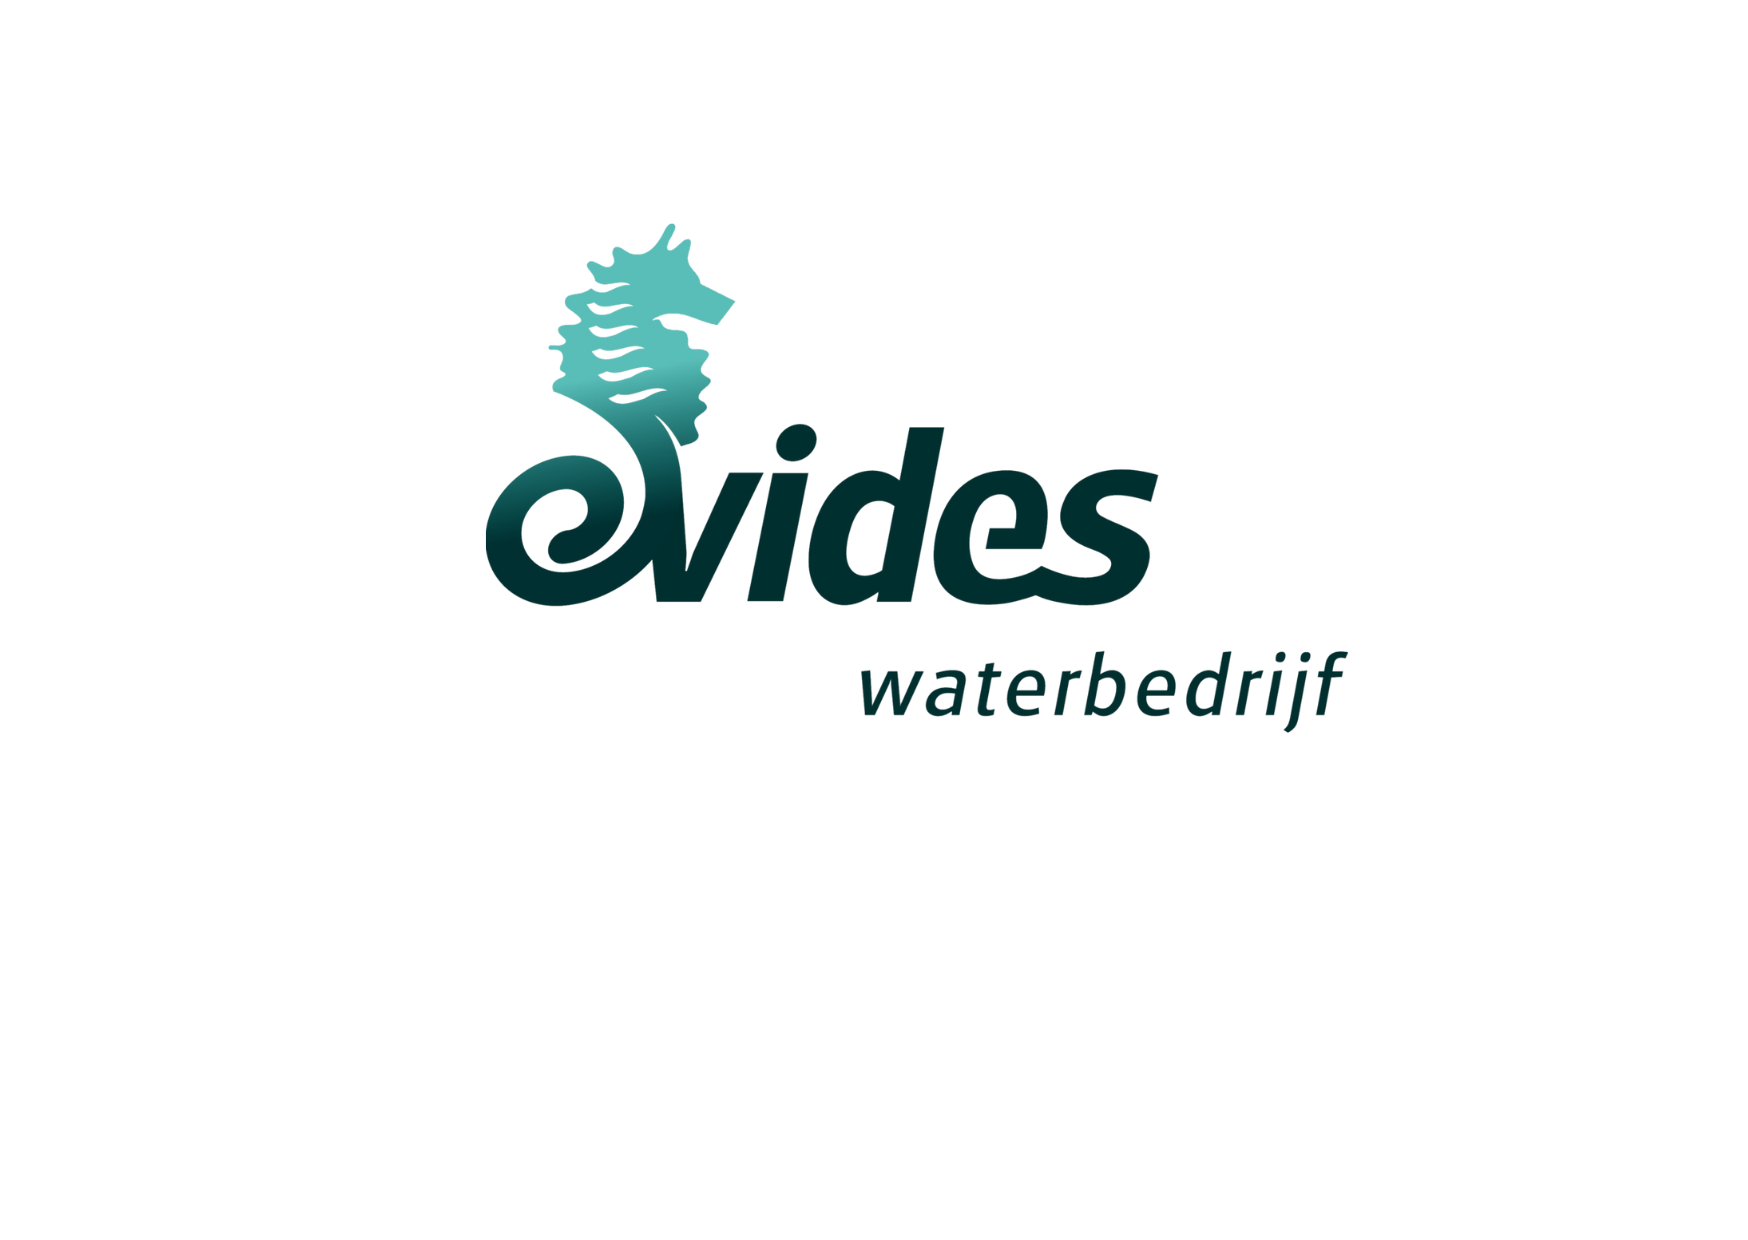 https://www.waterforlife.nl/files/visuals/avatars/Kopie-van-CBF-2.png